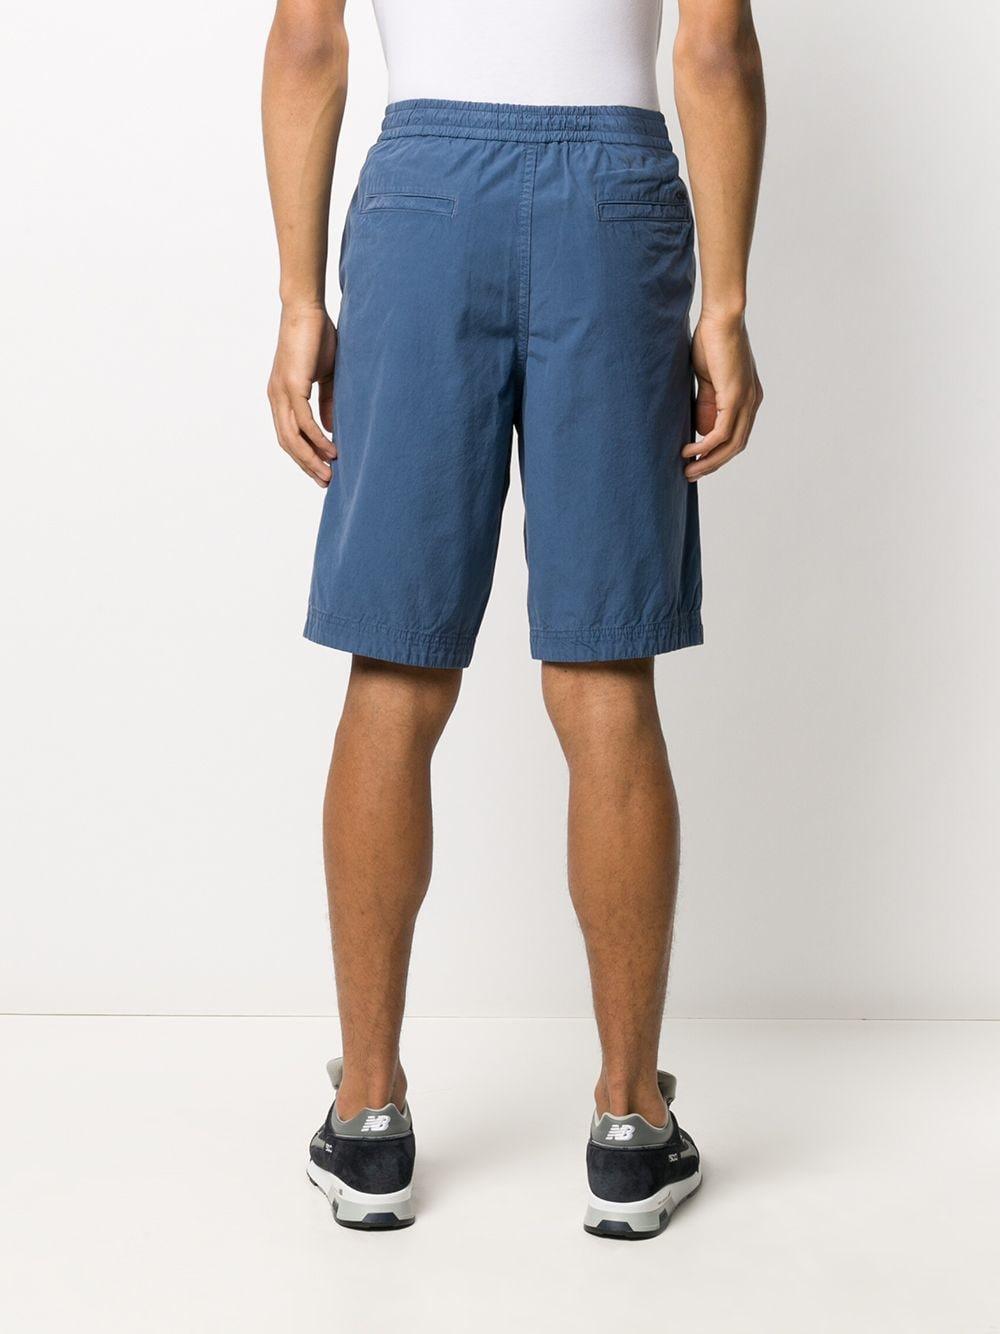 BOSS by Hugo Boss Cotton Drawstring Deck Shorts in Blue for Men - Lyst